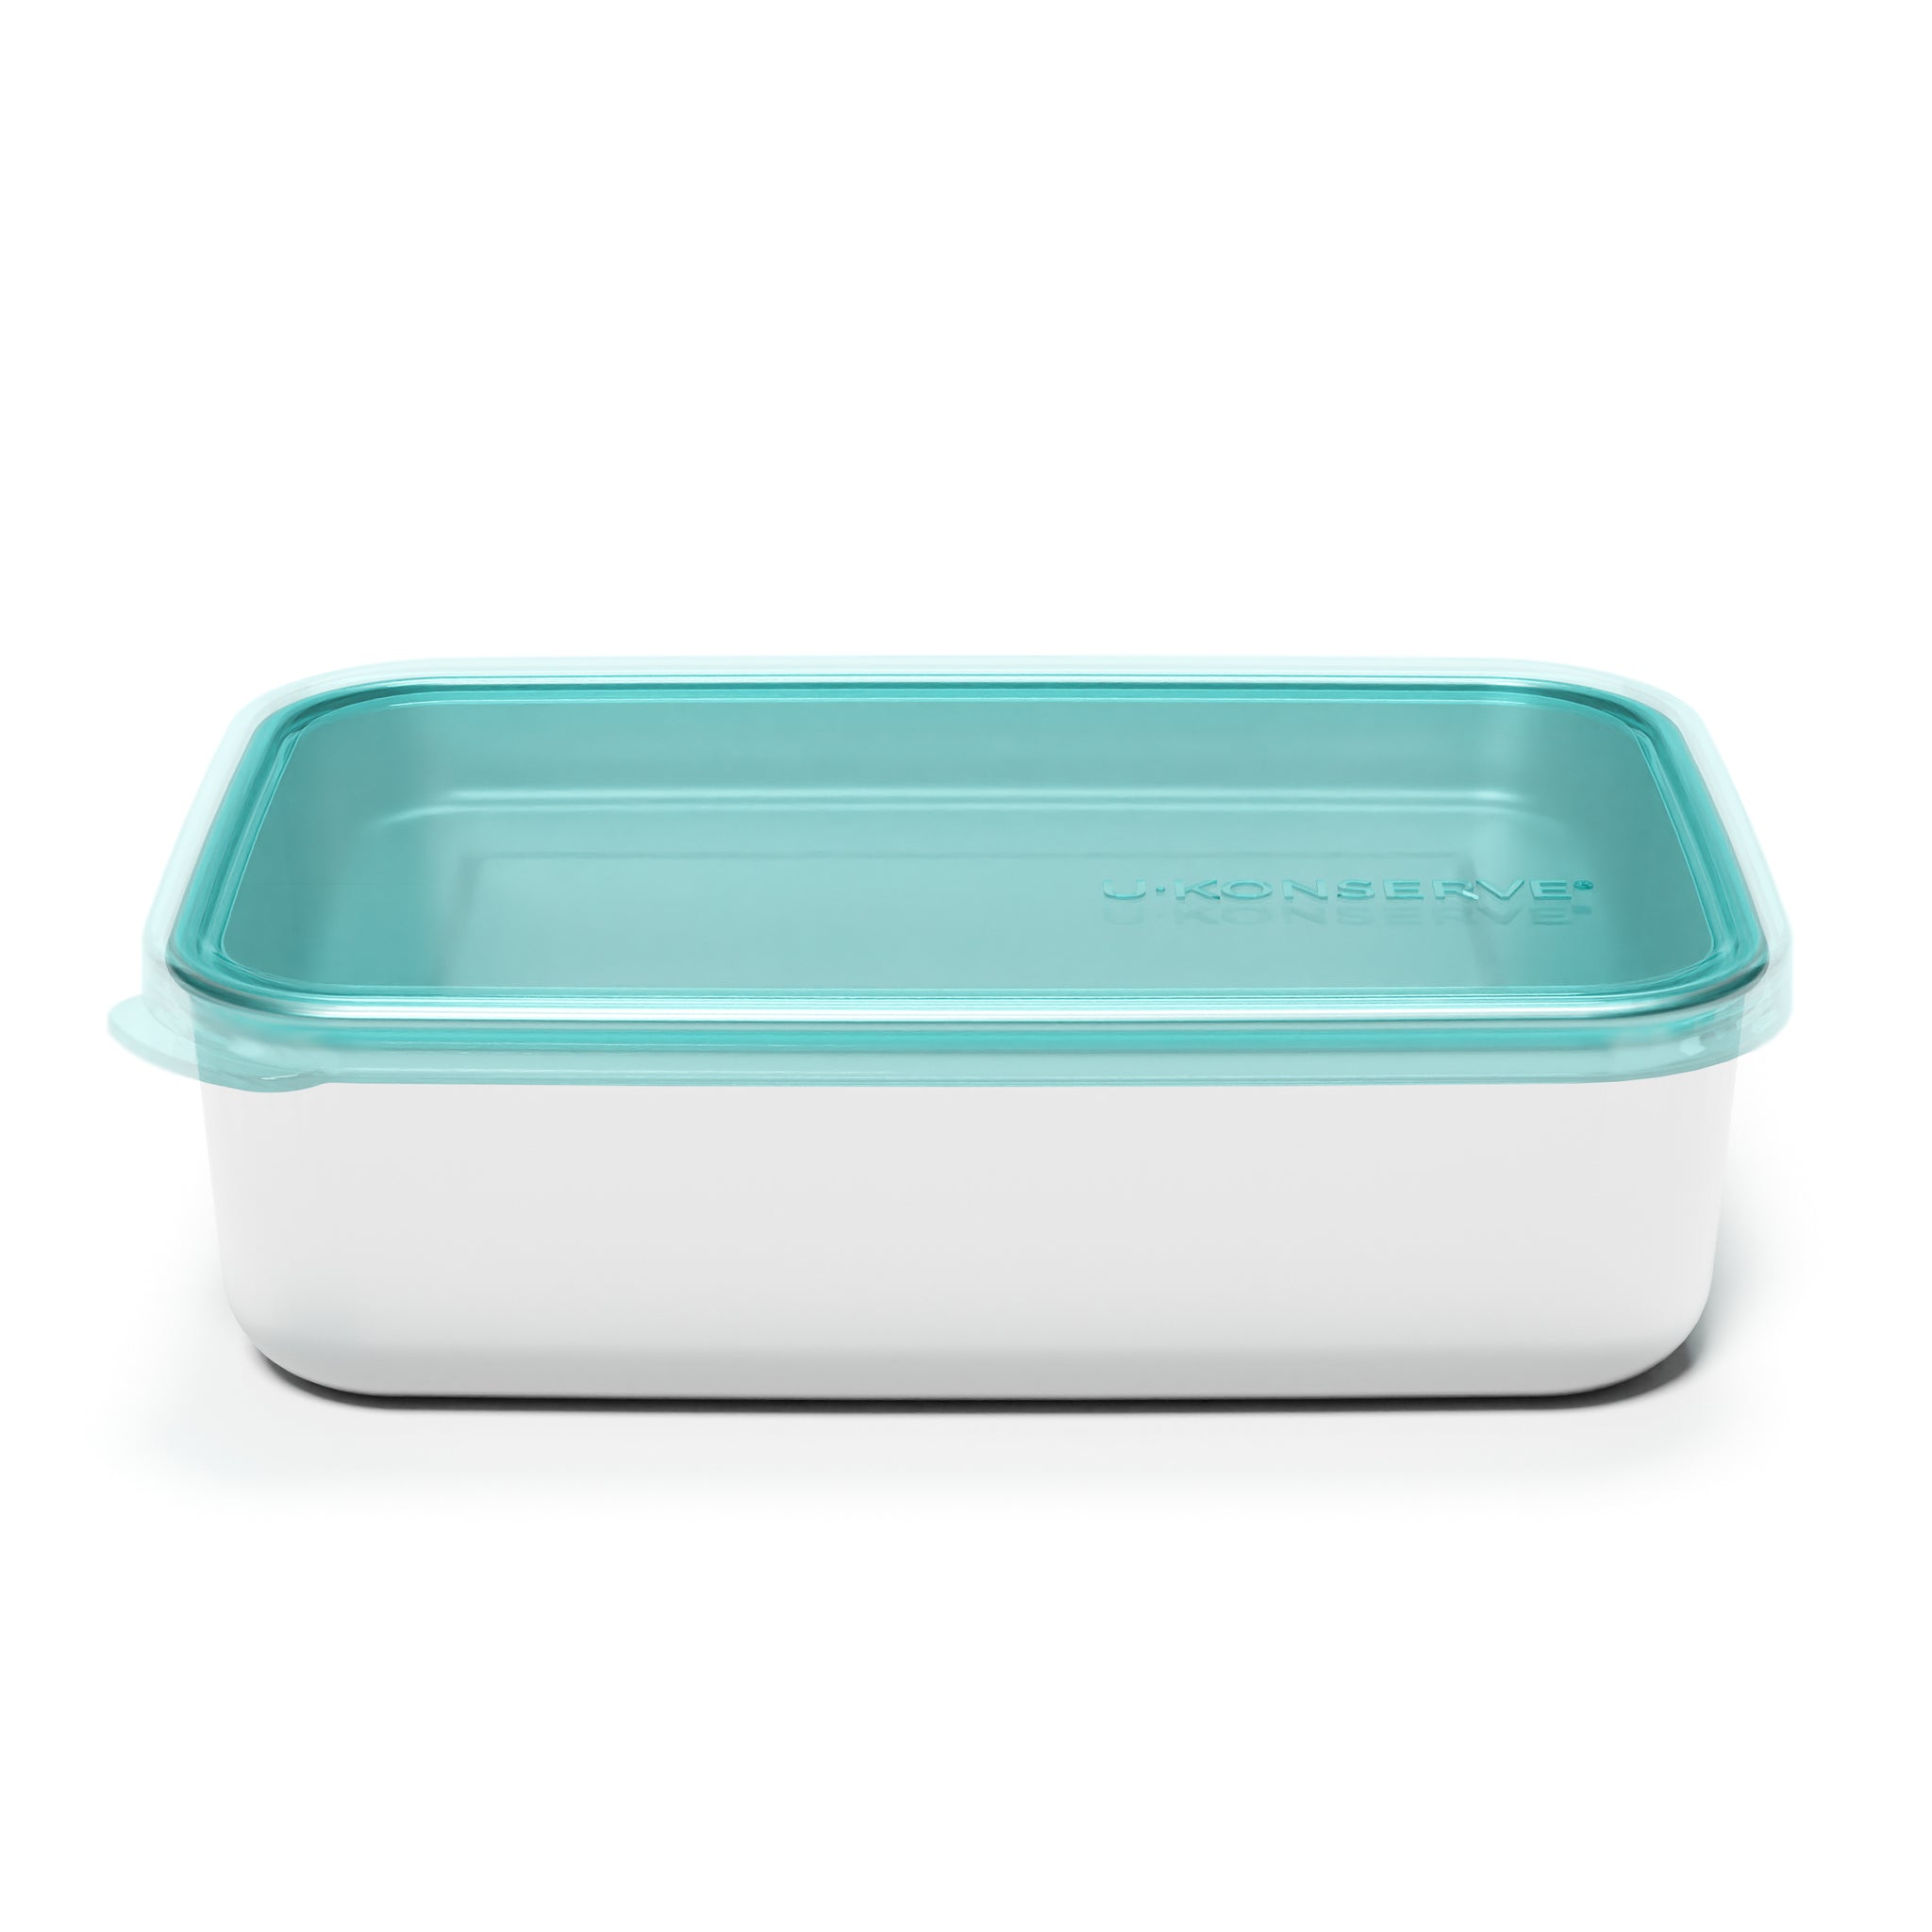 U Konserve Stainless Steel Food Storage Bento Box Container, Leak Proof Silicone Lid Dishwasher Safe - Plastic Free (30oz Blue)